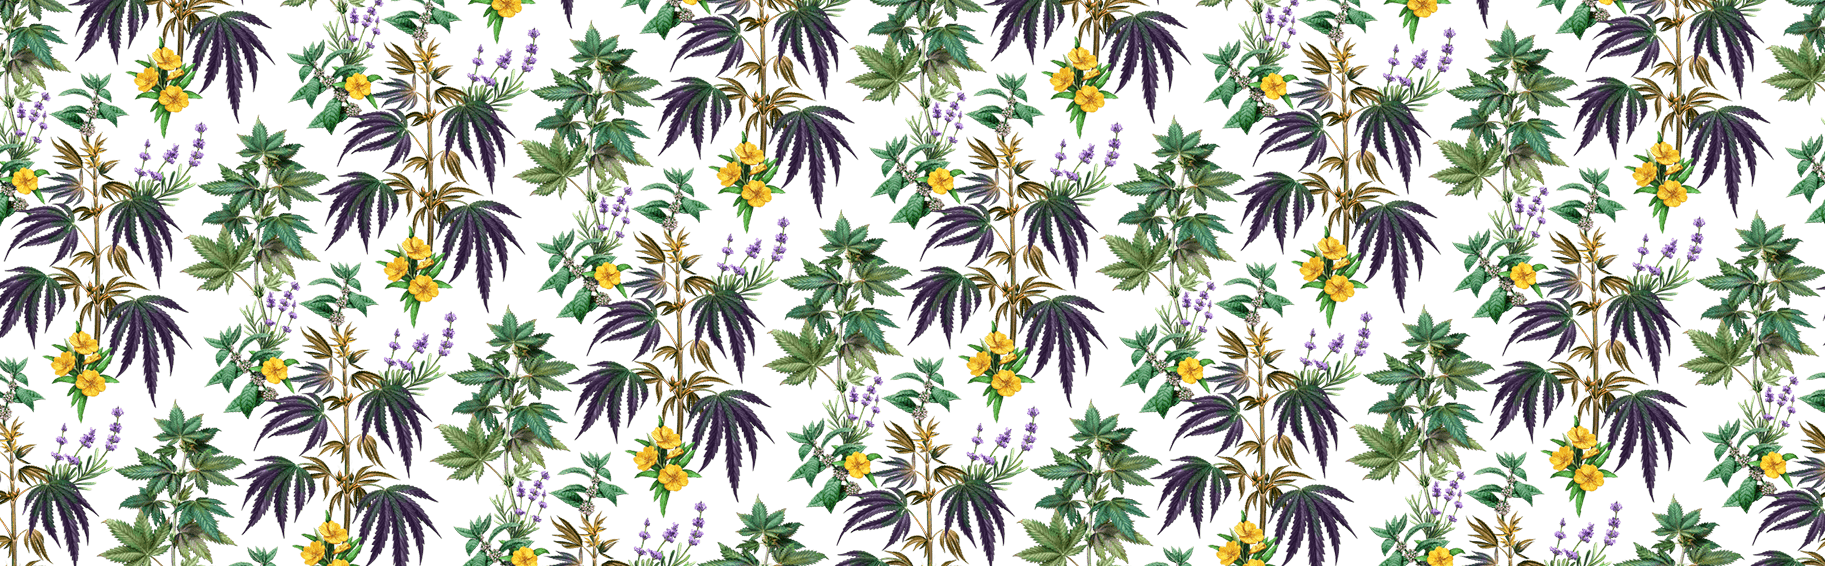 Botanical / scientific / pattern illustration